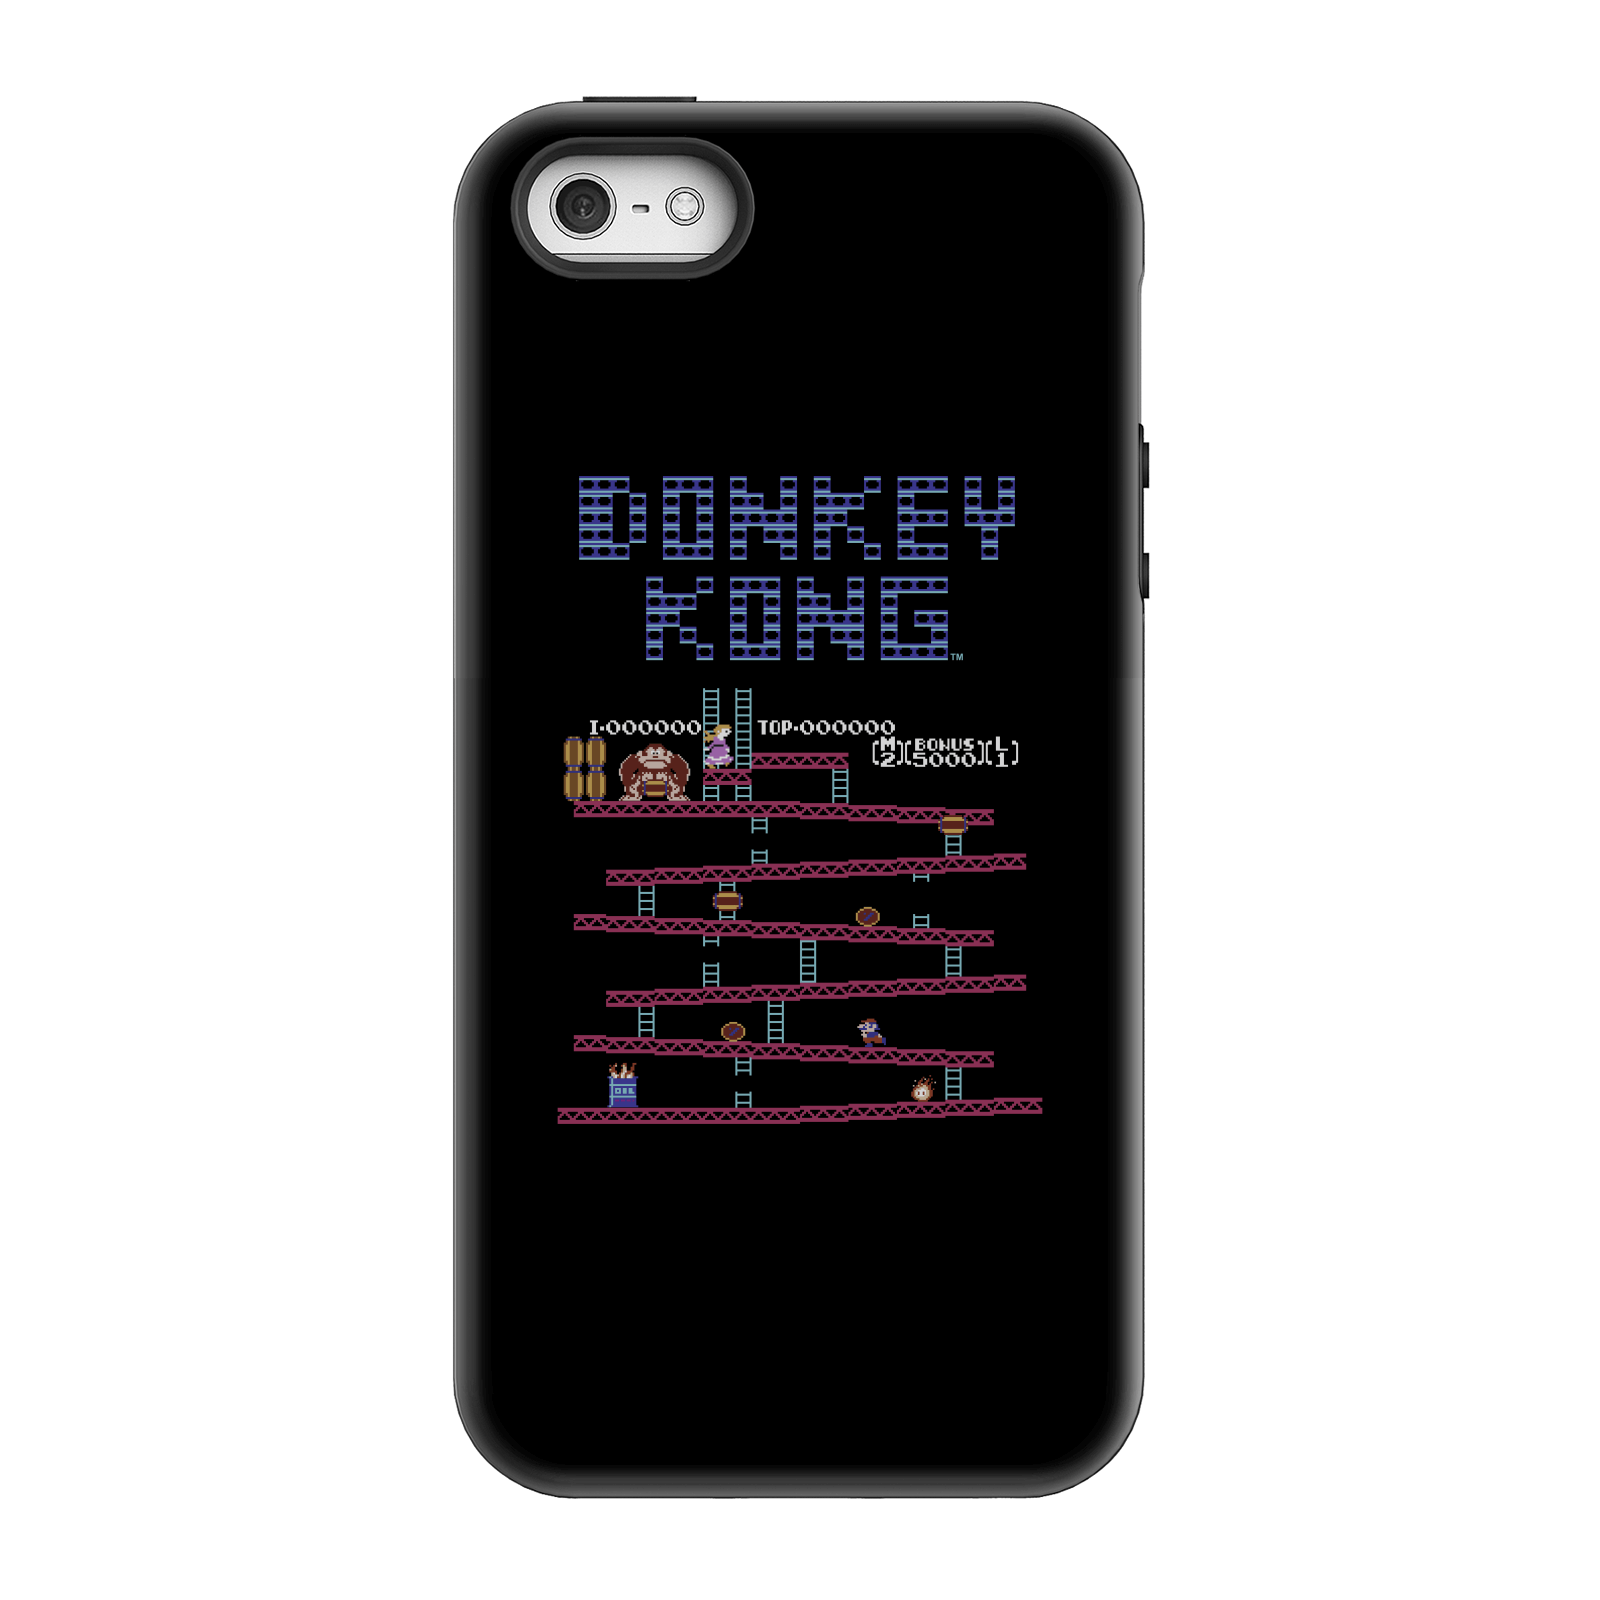 Nintendo Donkey Kong Retro Phone Case - iPhone 5/5s - Tough Case - Gloss